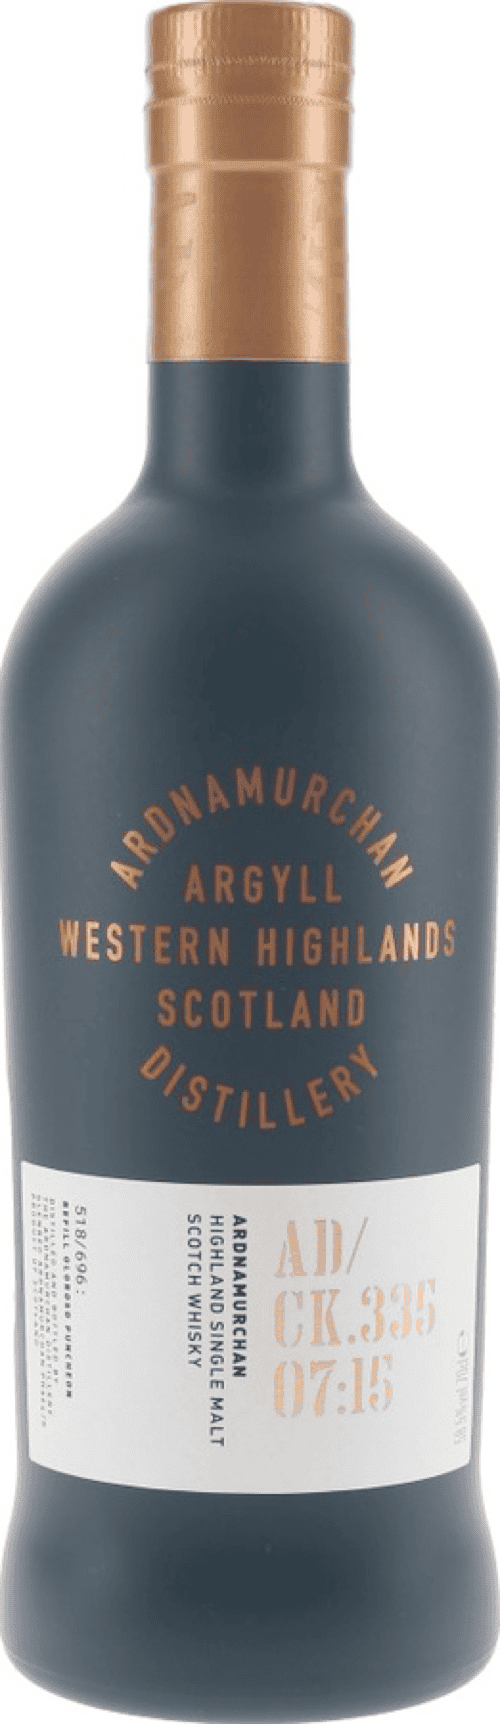 Ardnamurchan 2015 AD/CK.335 07:15 Single Malt Whisky 58.5% ABV 700ml